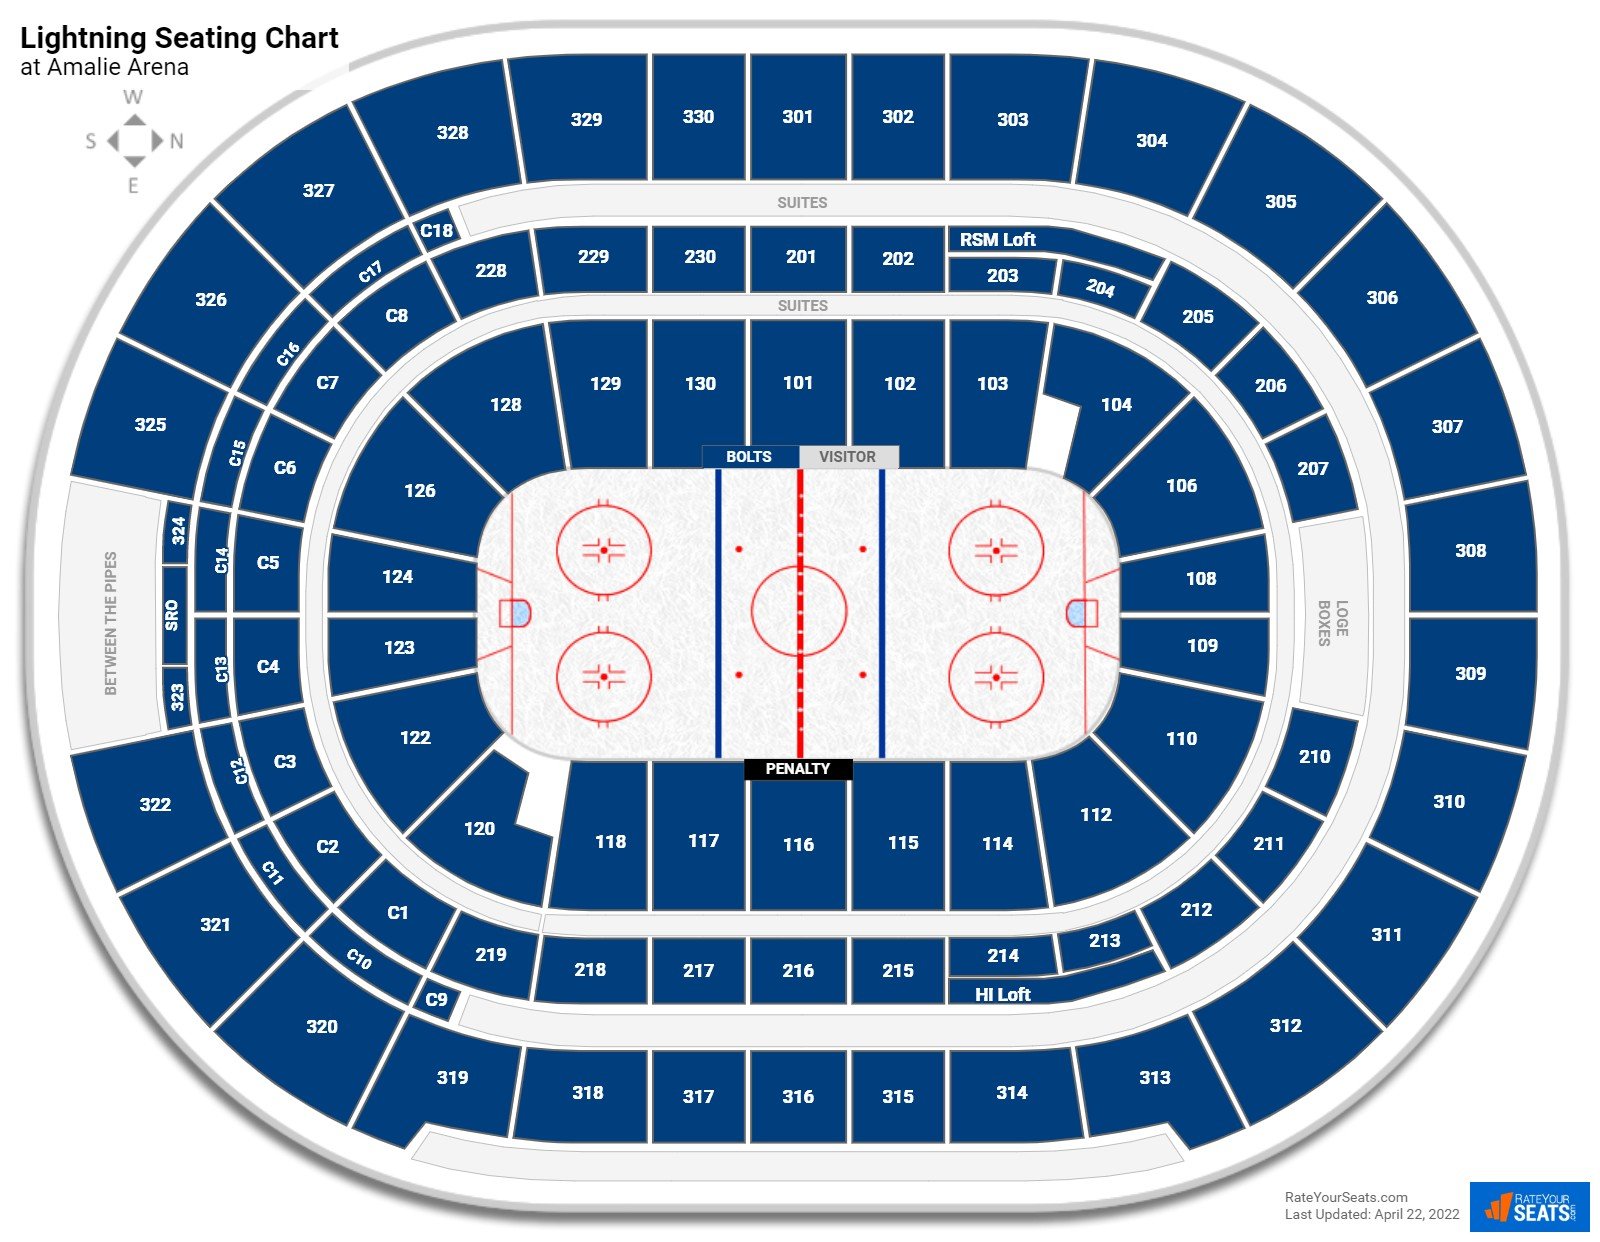 Tampa Bay Lightning Seating Chart at Amalie Arena